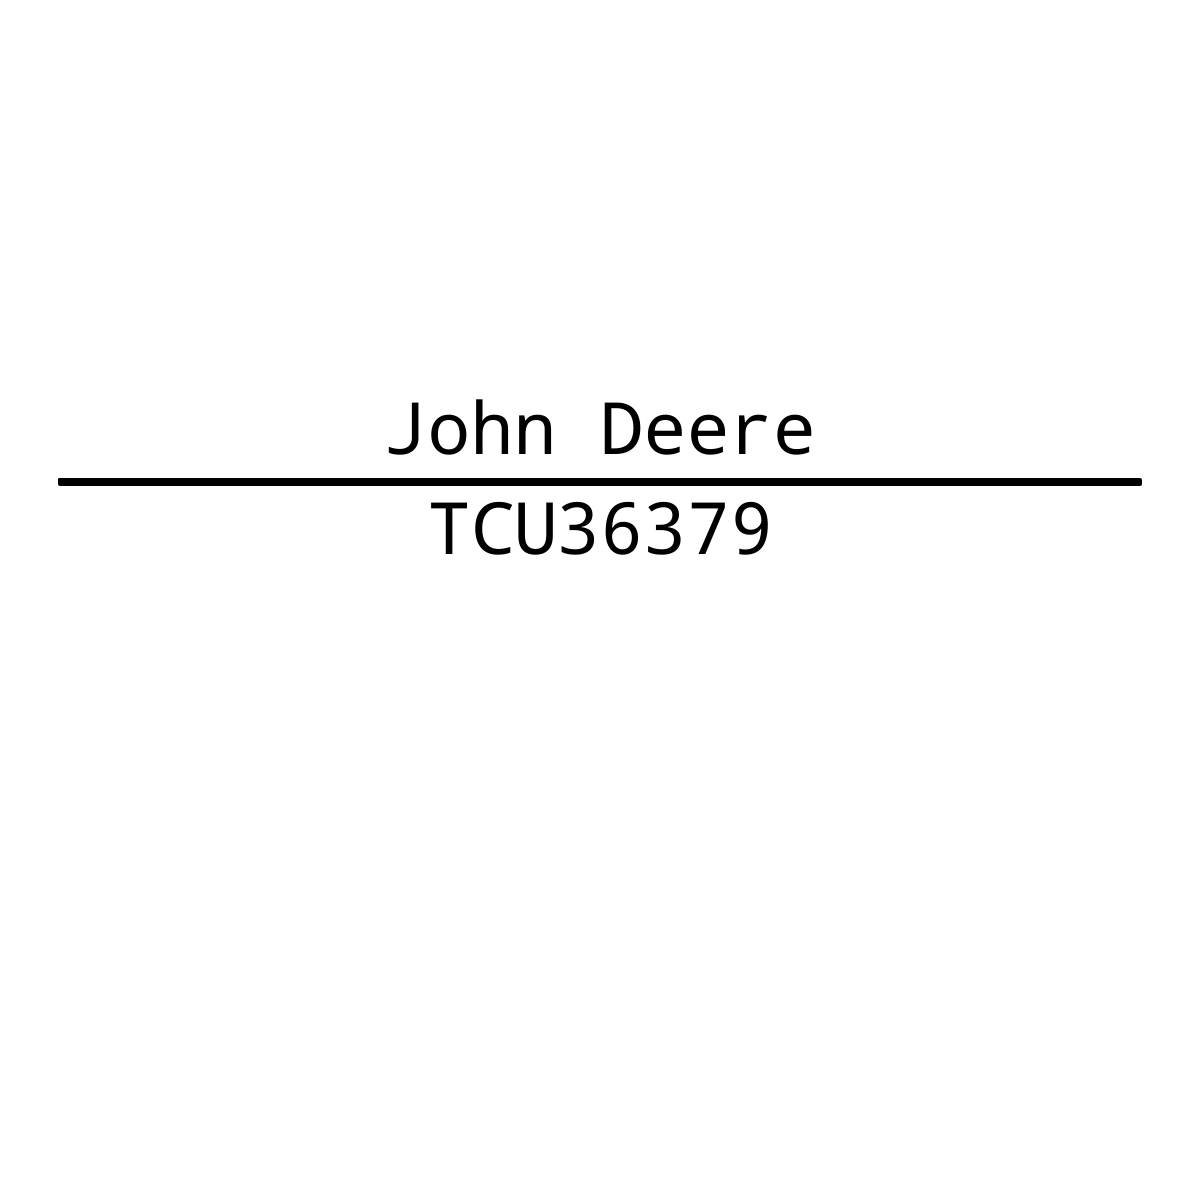 John Deere TCU36379 Spacer